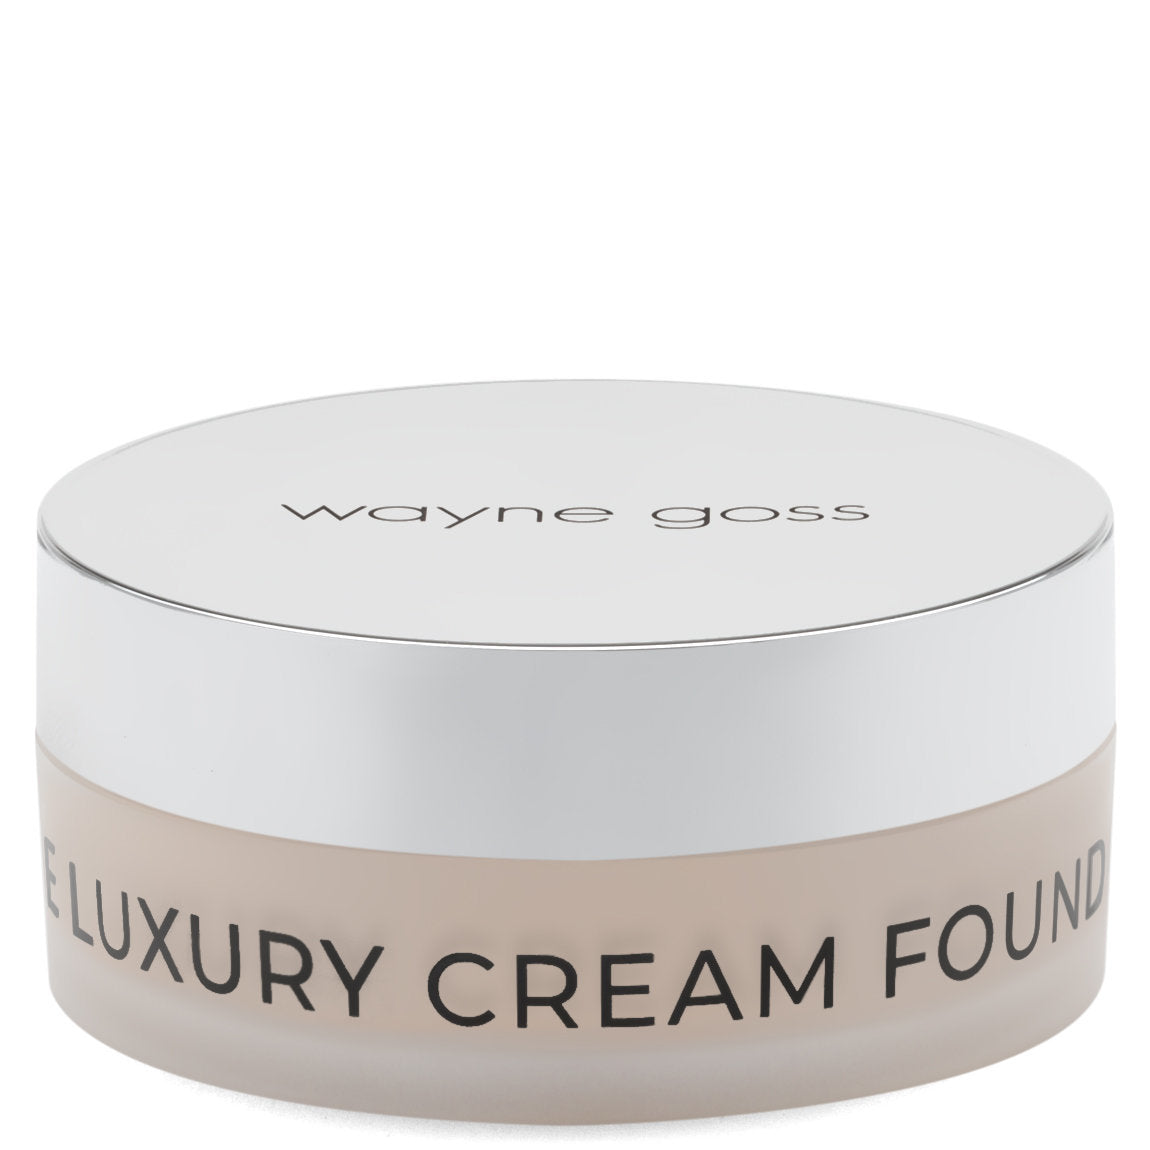 The Luxury Cream Foundation - Shade 12